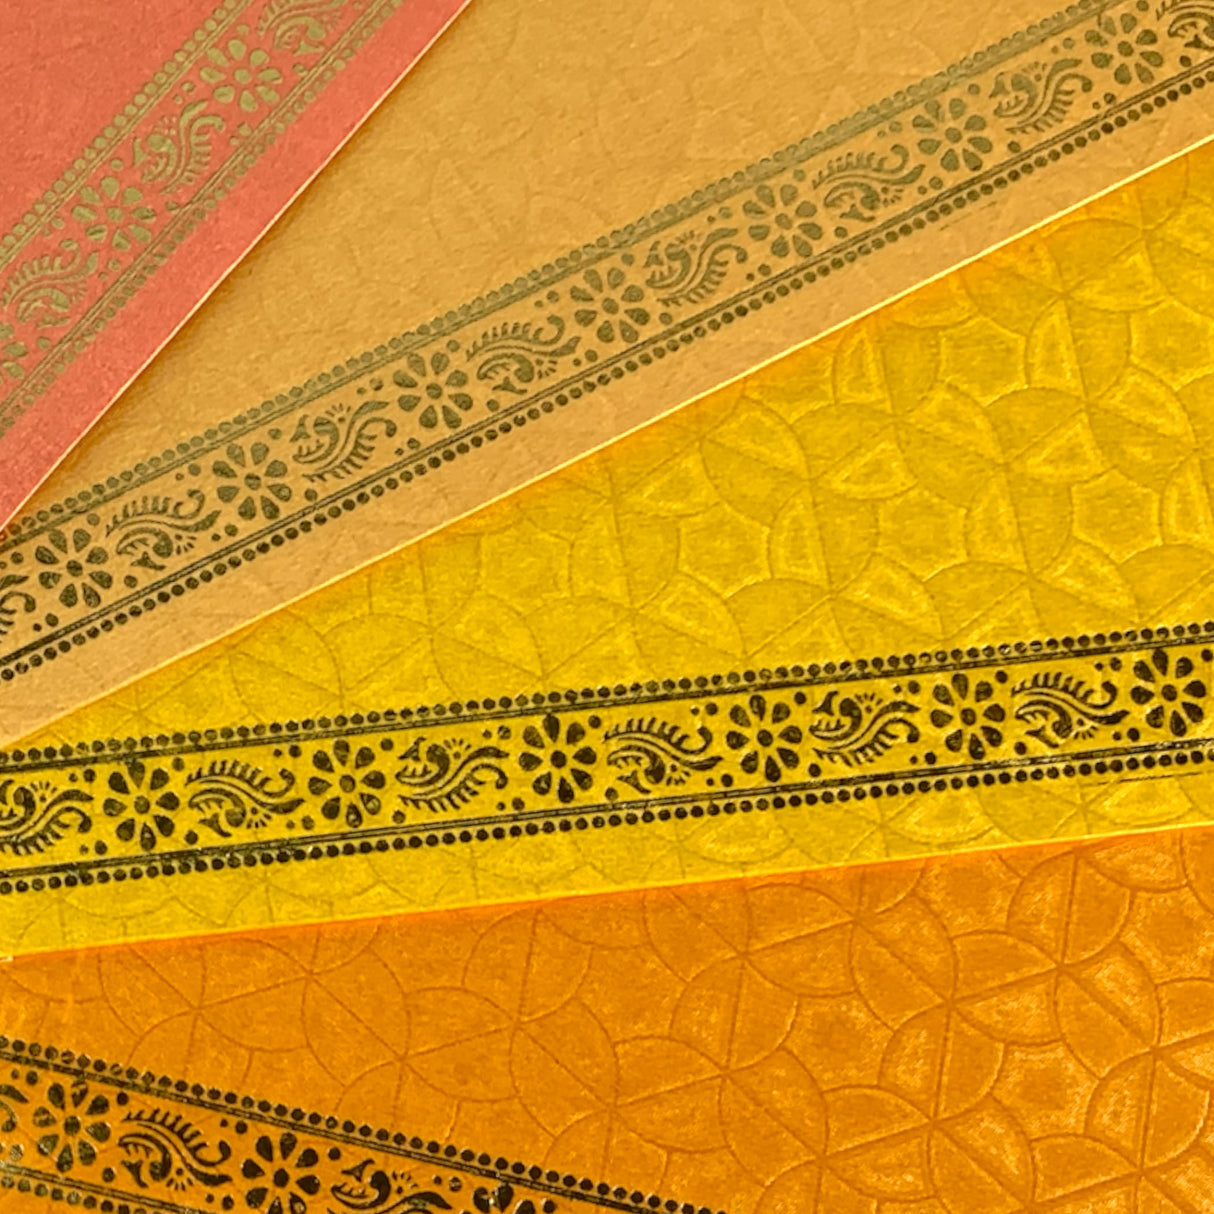 Pack of 10 money envelopes for cash assorted indian paper